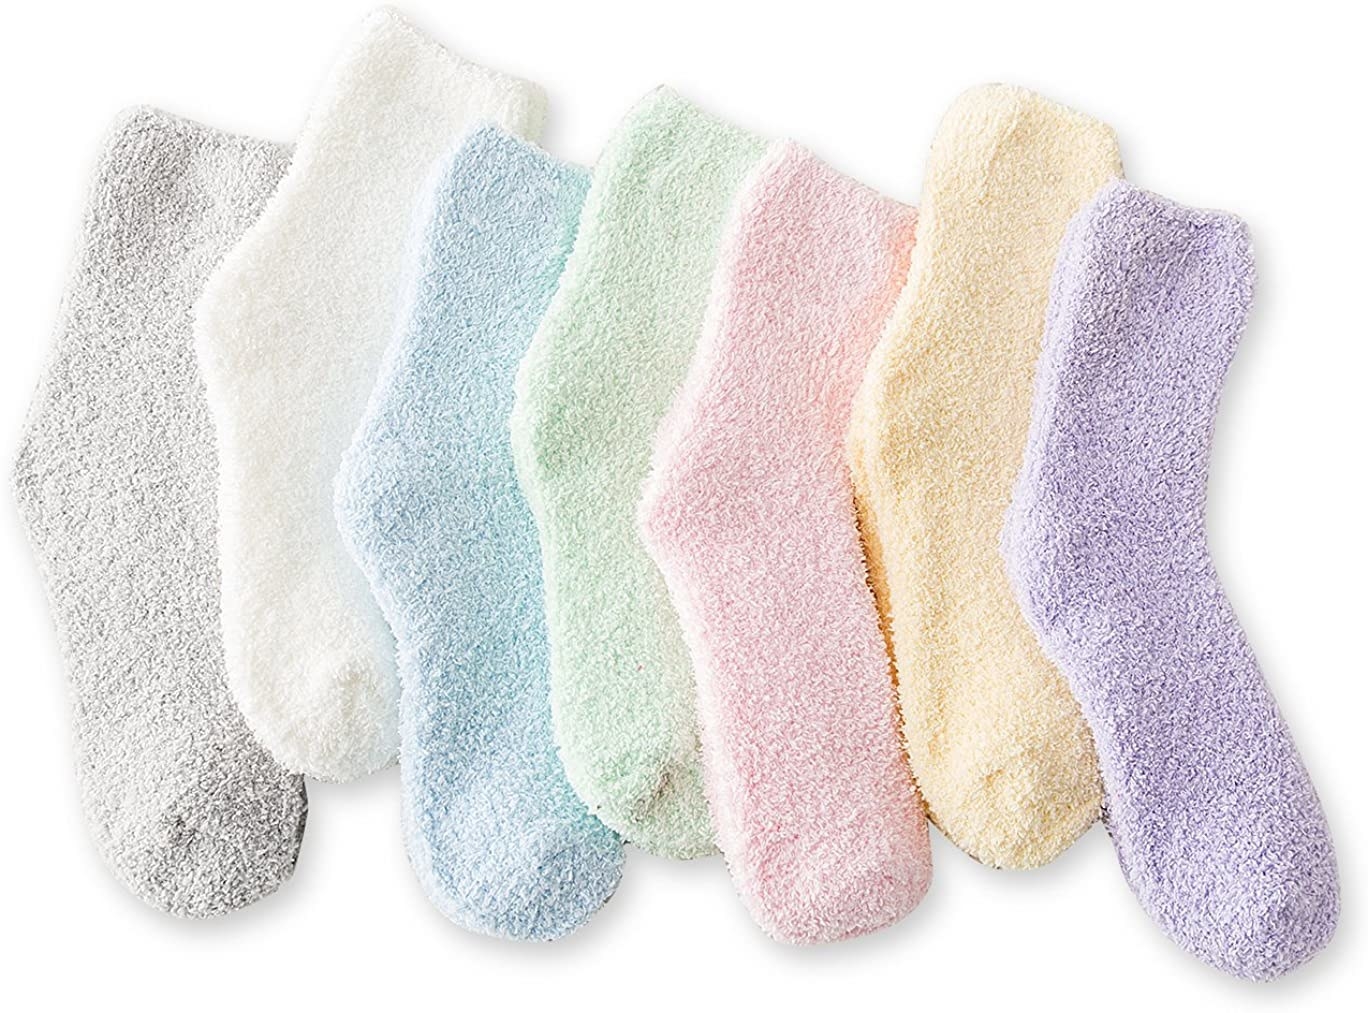 A lineup of pastel socks